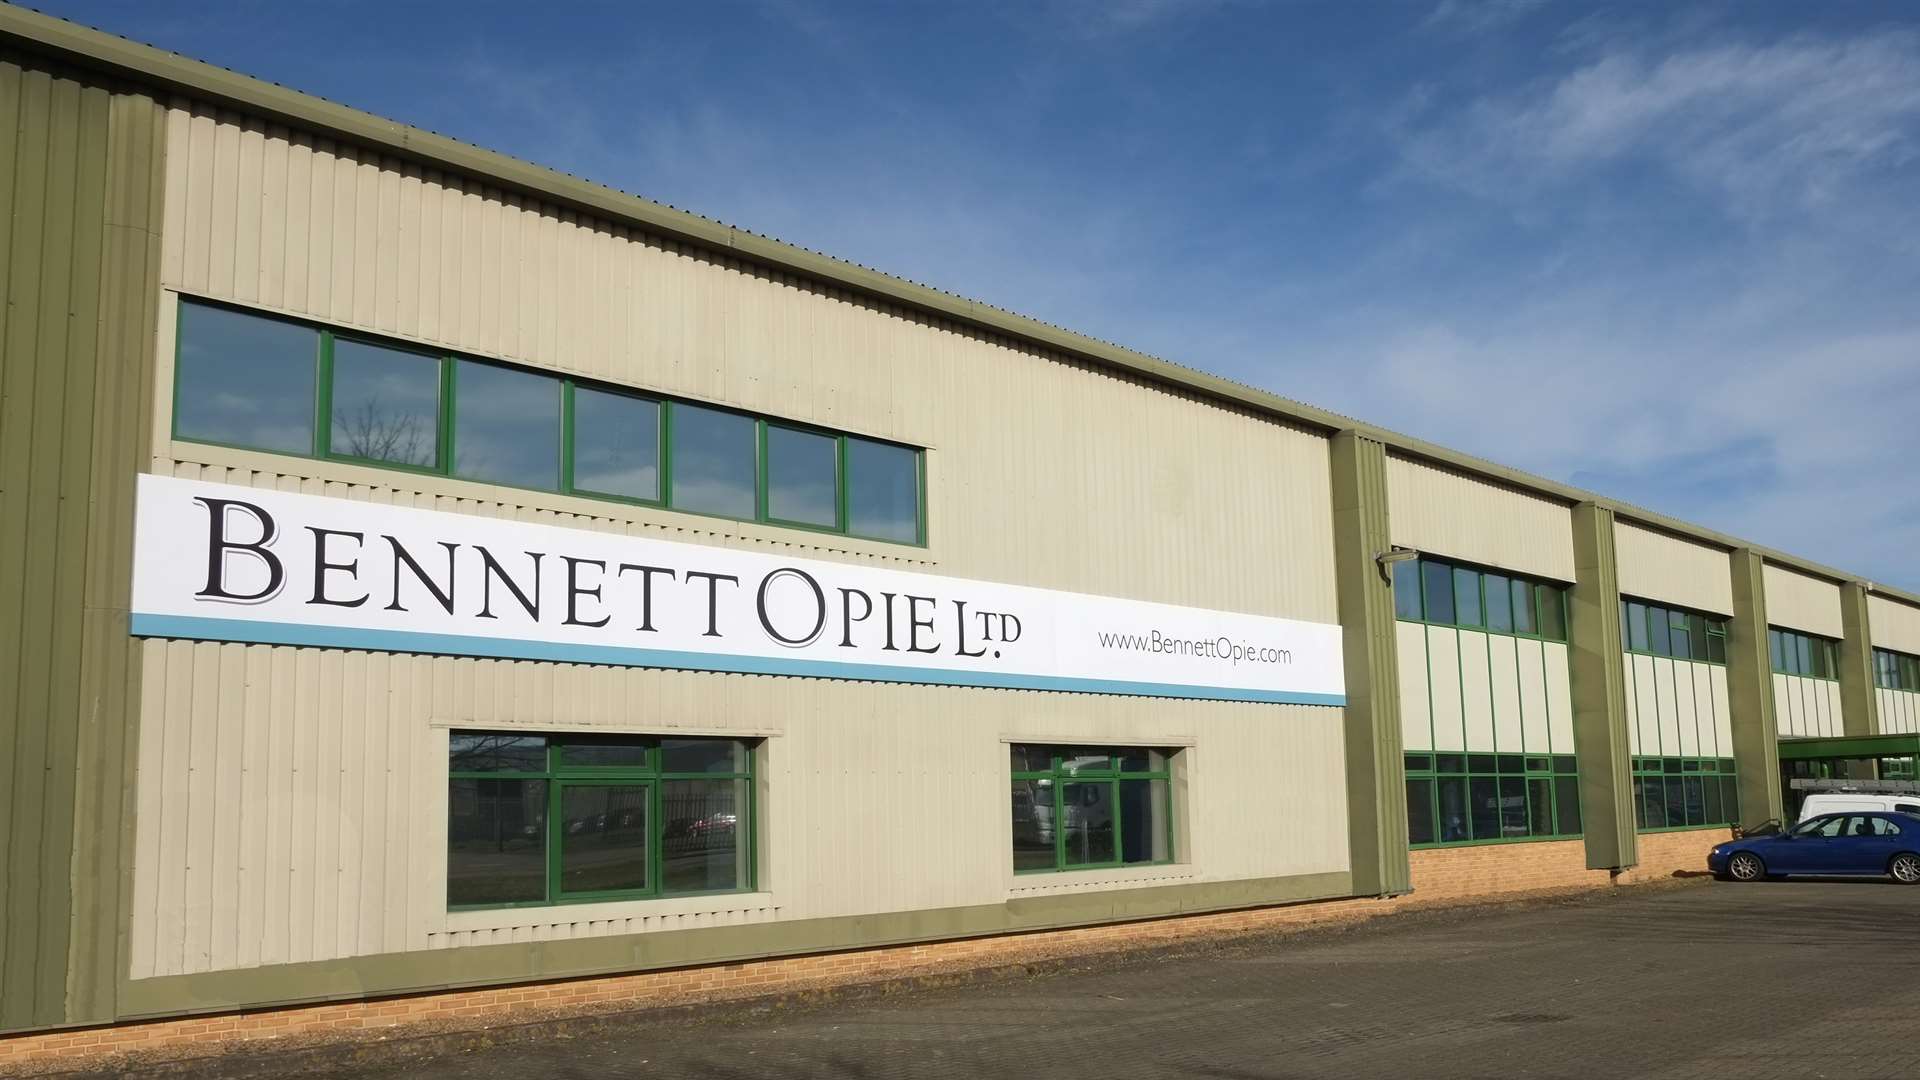 Bennett Opie's headquarters in Sittingbourne